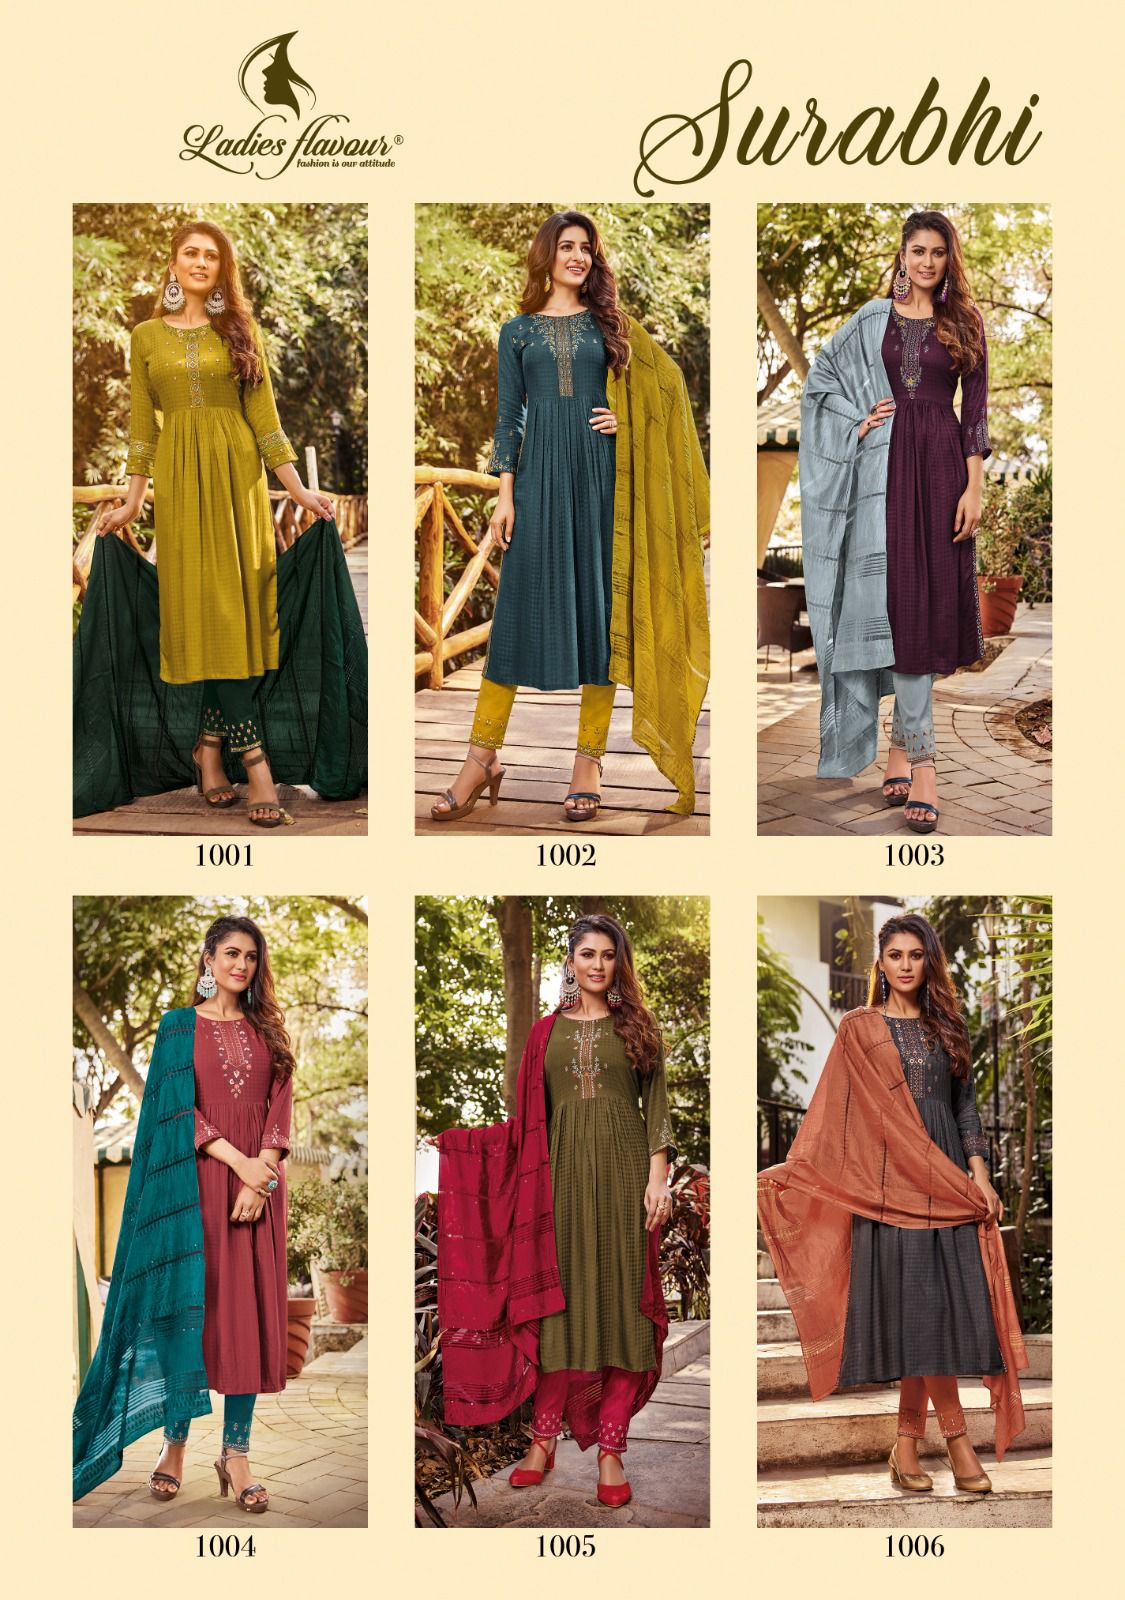 Ladies Flavour Surabhi collection 10